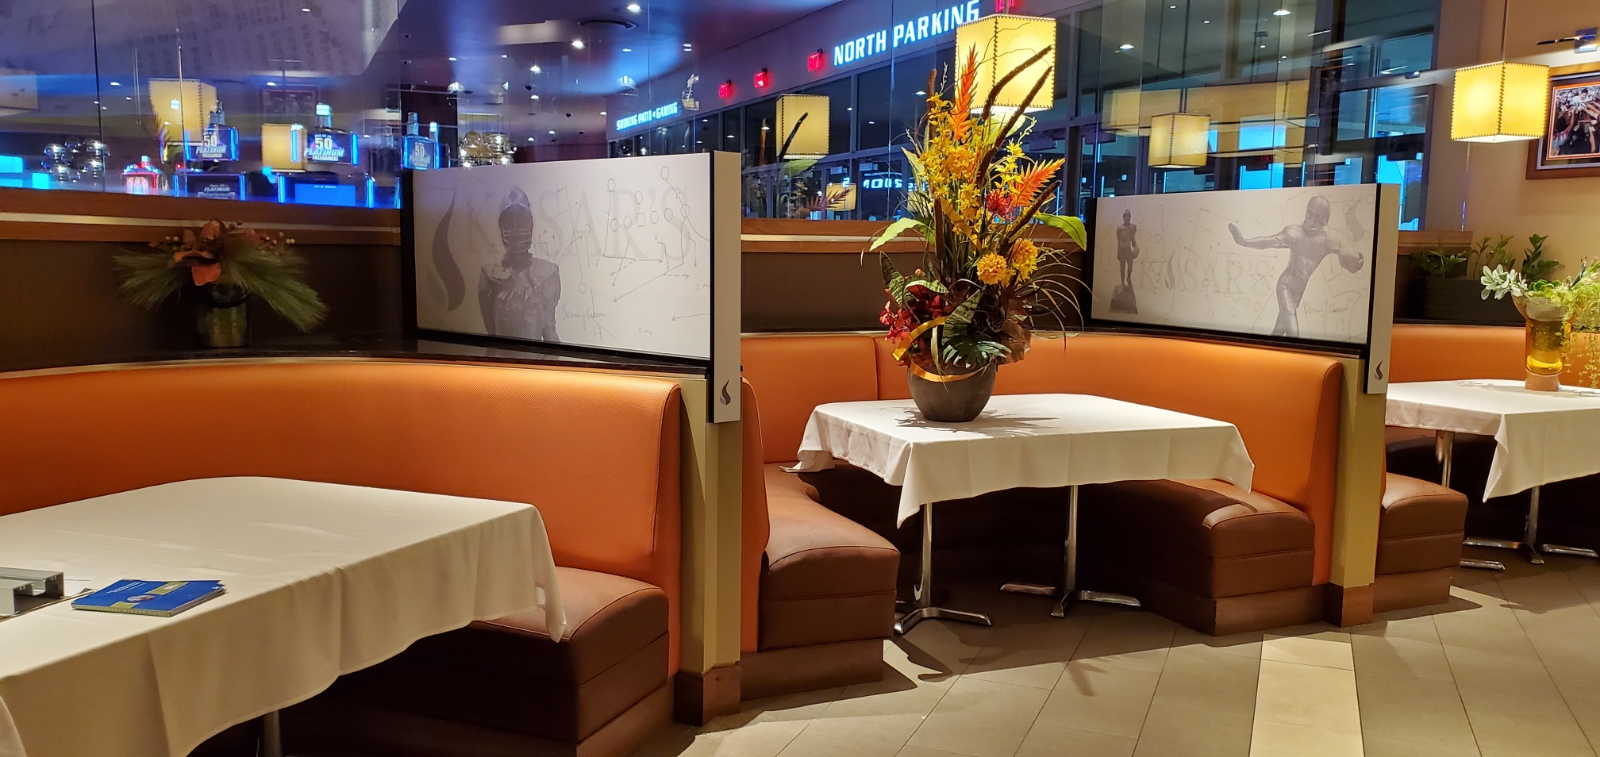 Restaurant seat graphics